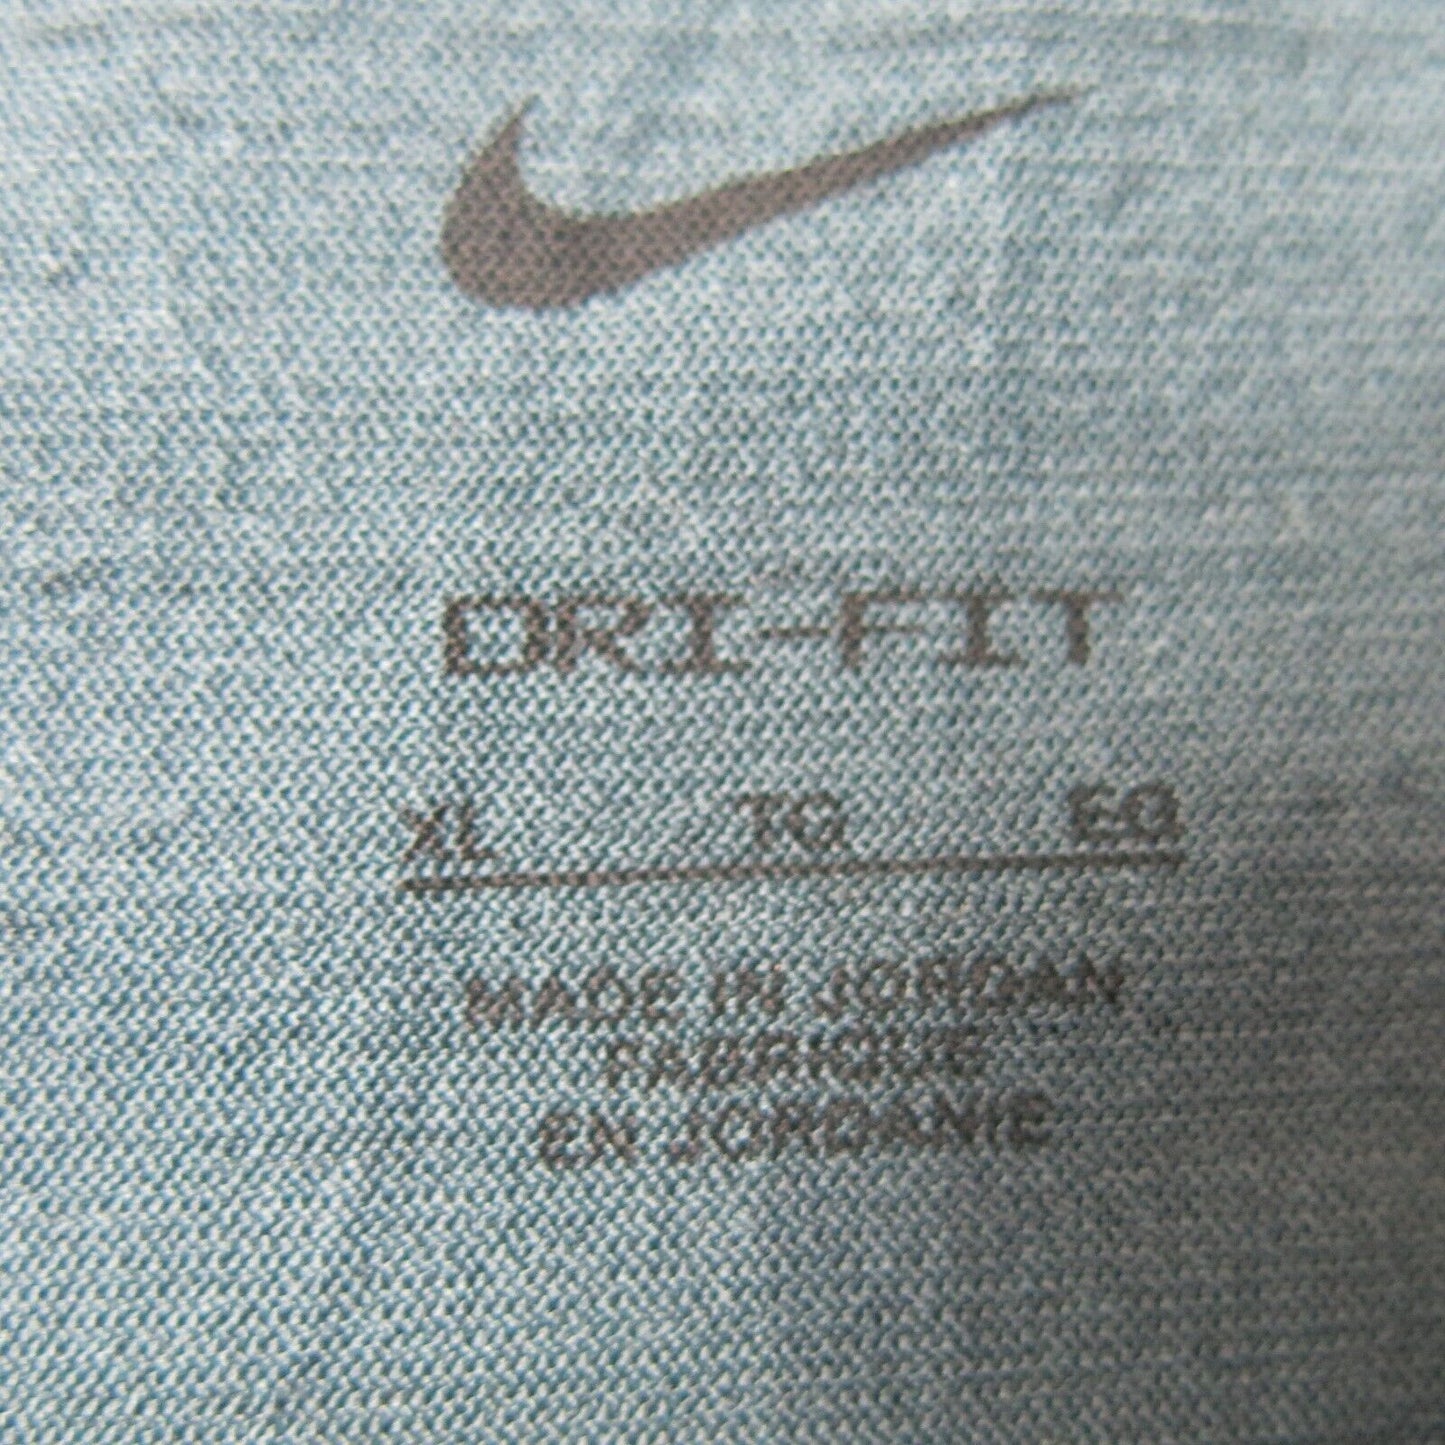 Nike Dri Fit Mens Crew Neck Sports T Shirt Short Sleeves Stripped Blue Logo XL